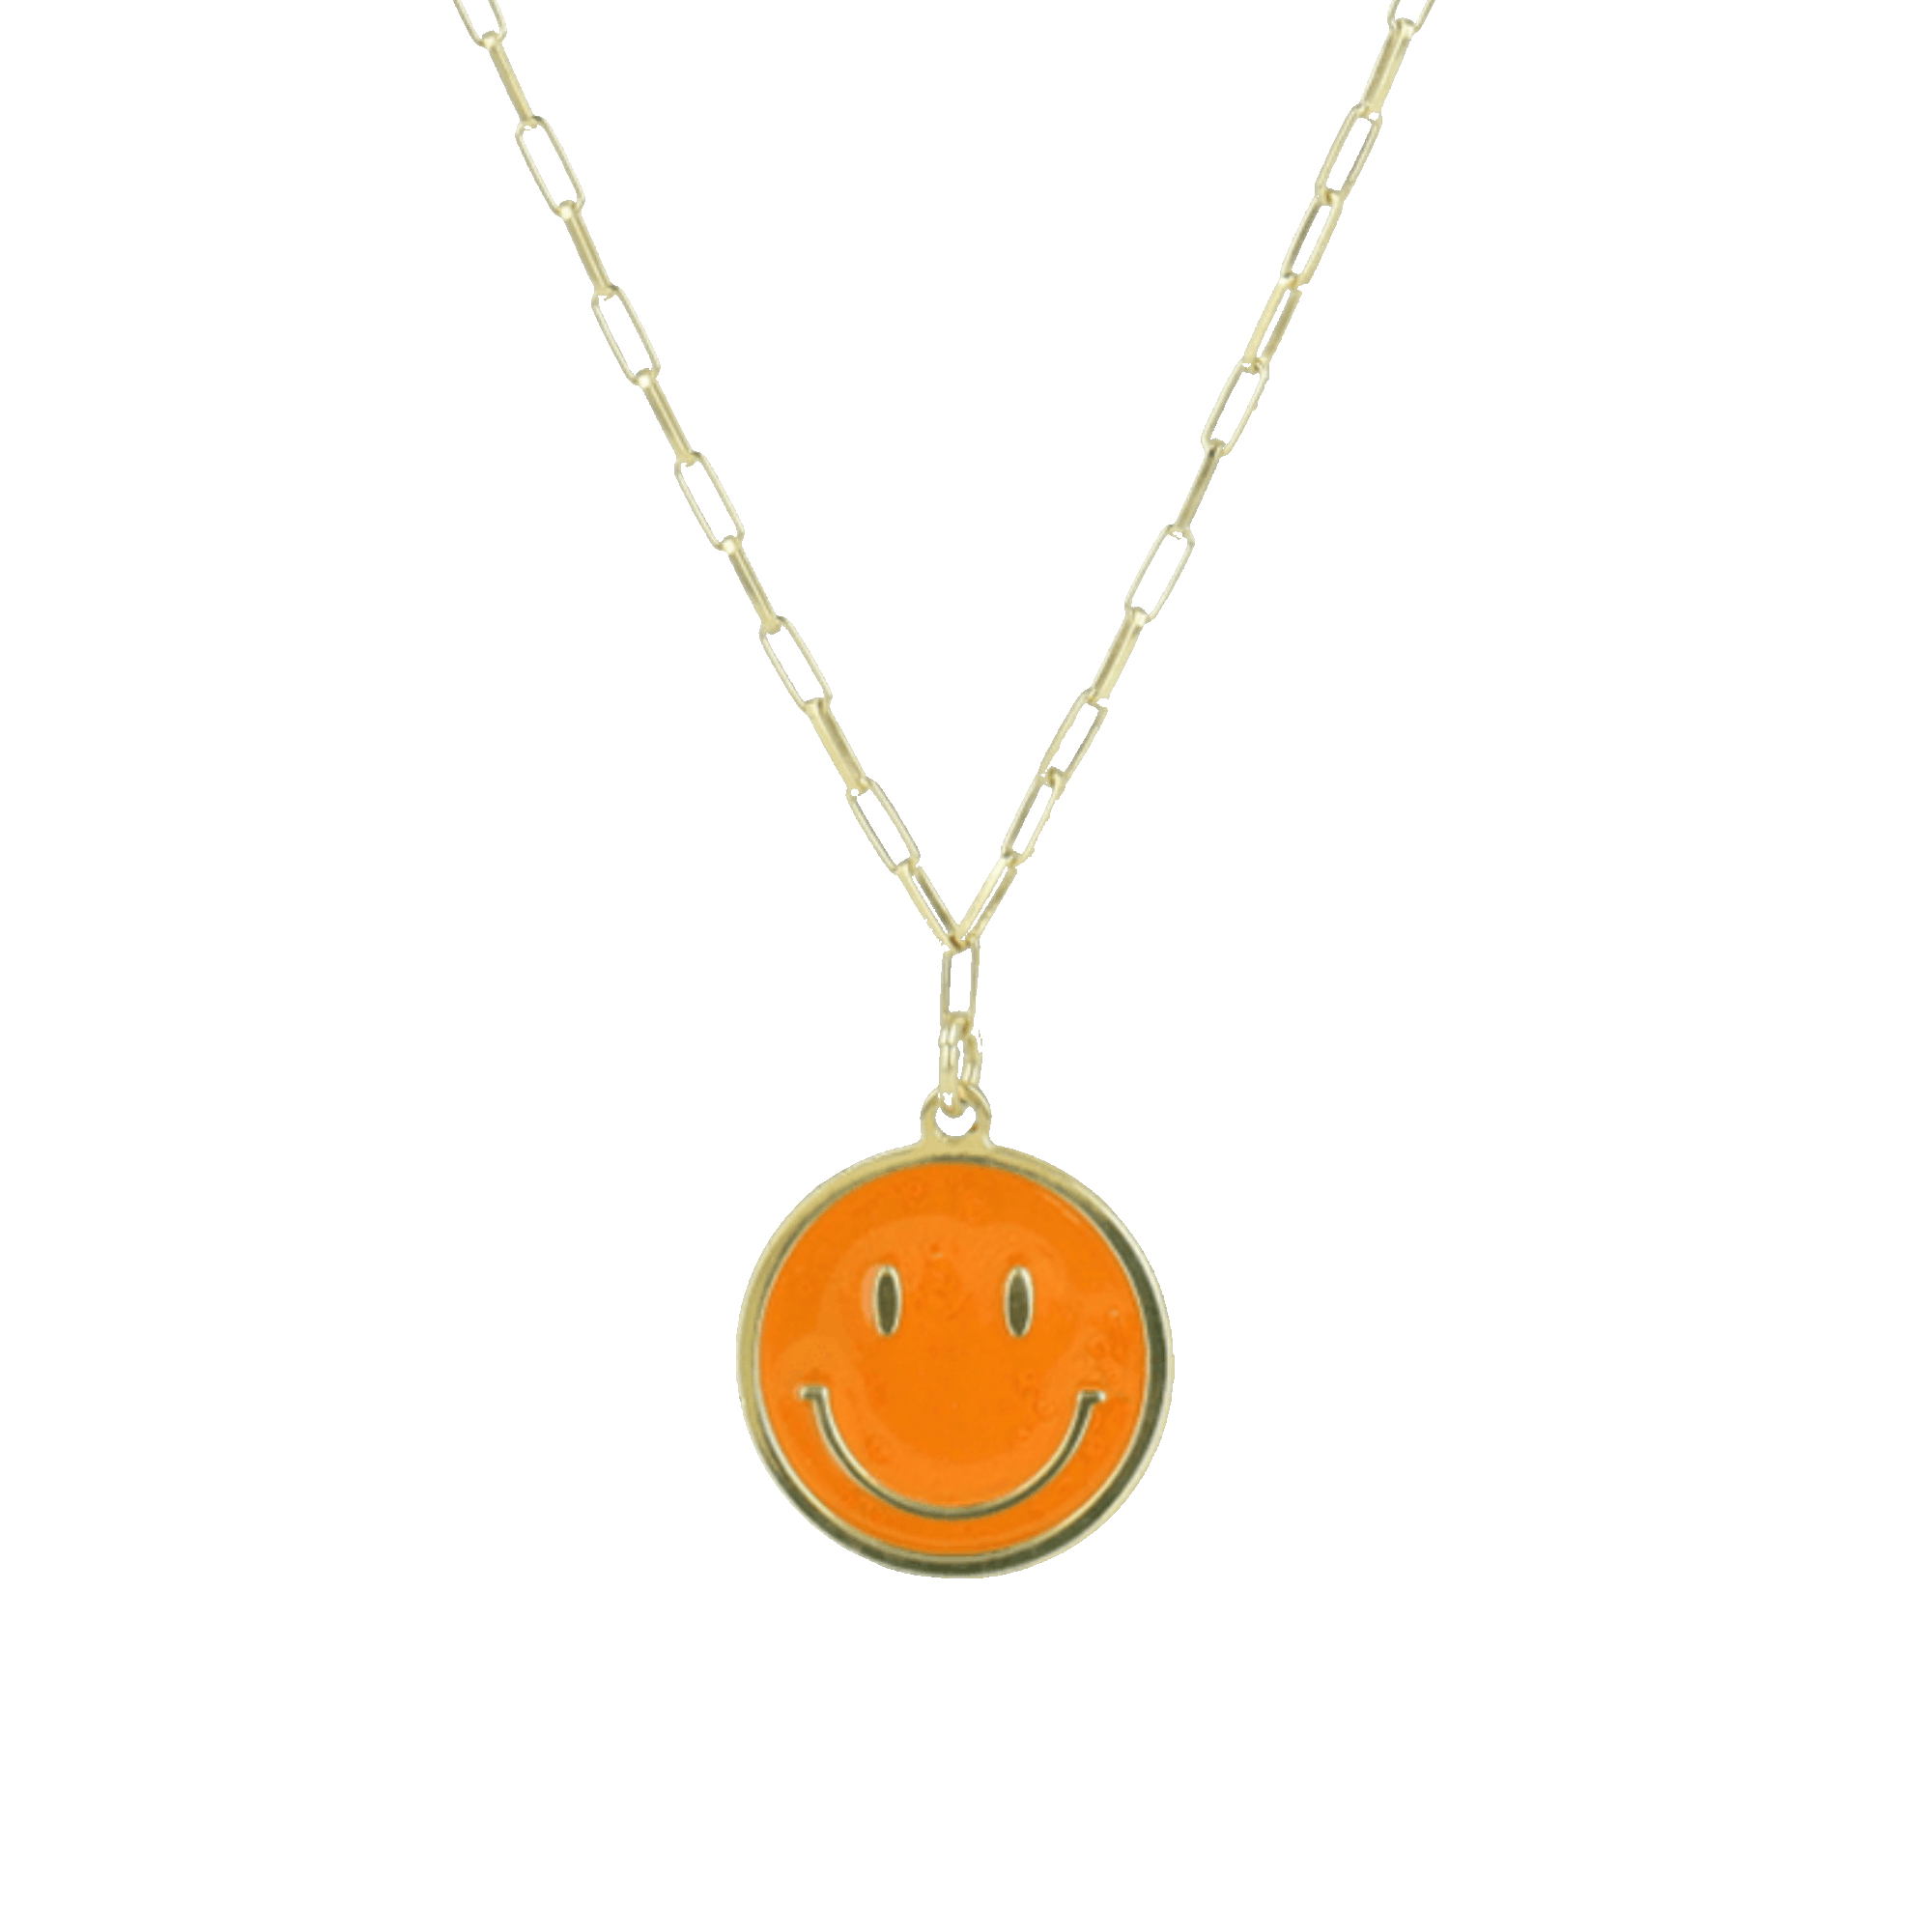 Smiley necklace enamel orange